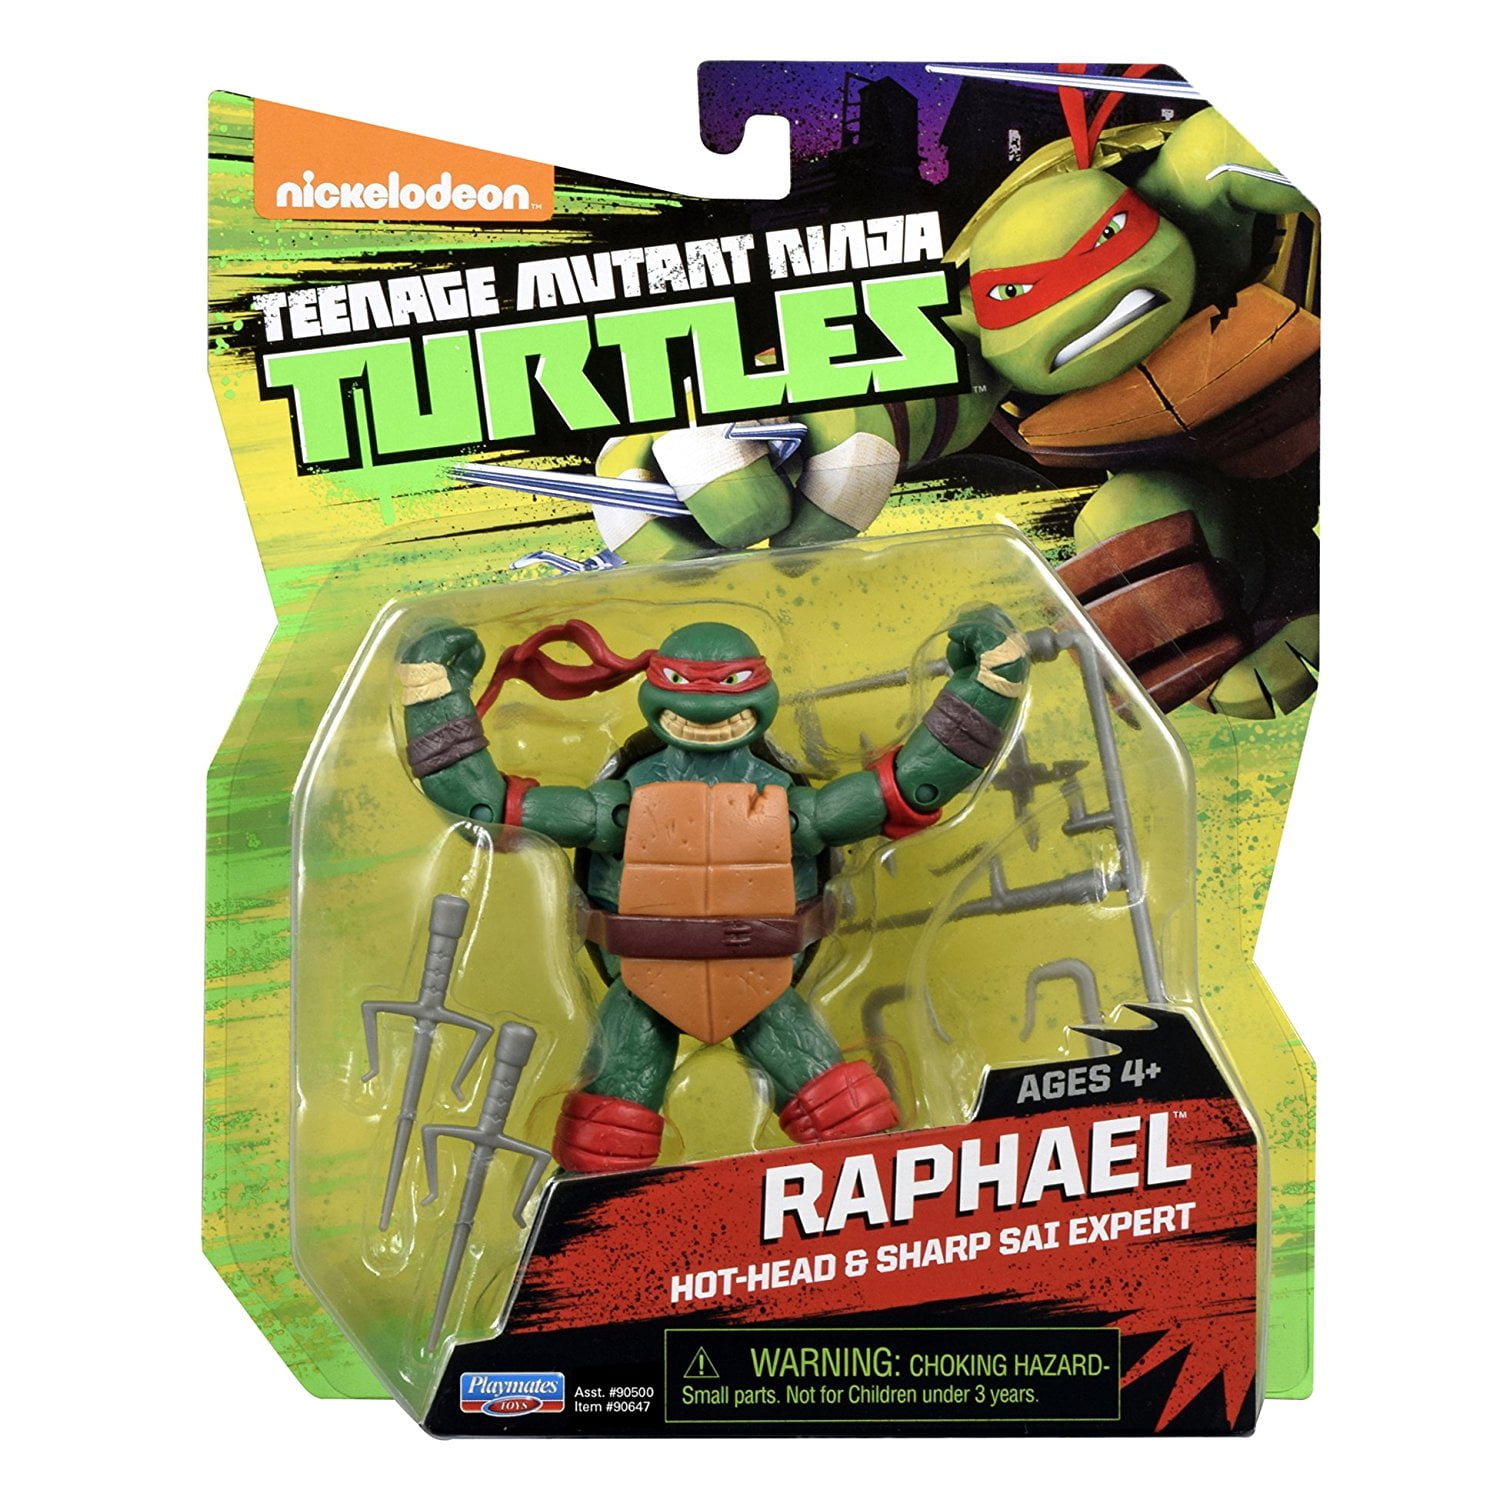 Details about   Cube It Teenage Mutant Ninja Turtle blind TMNT Collectible Figure Raphael toys 